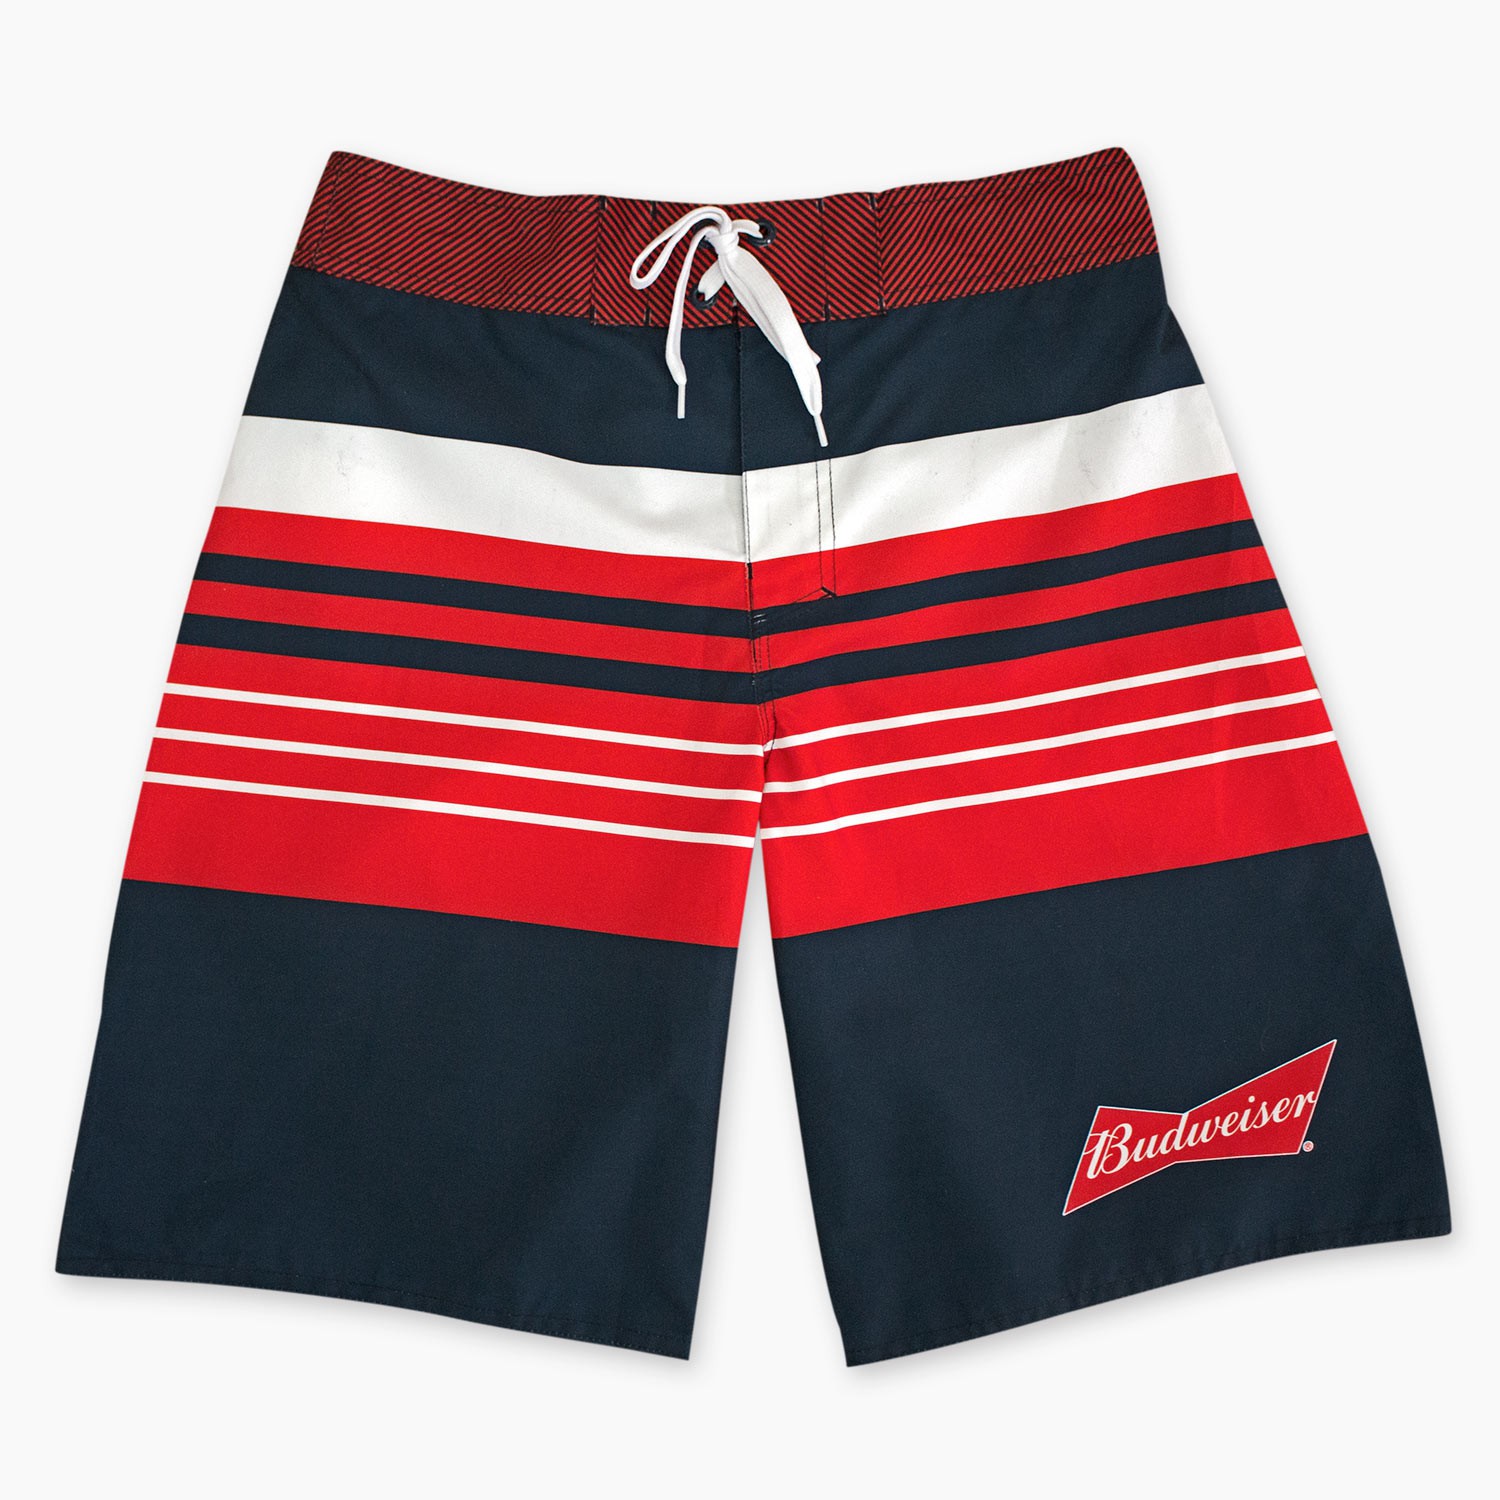 Budweiser Men's Striped Board Shorts